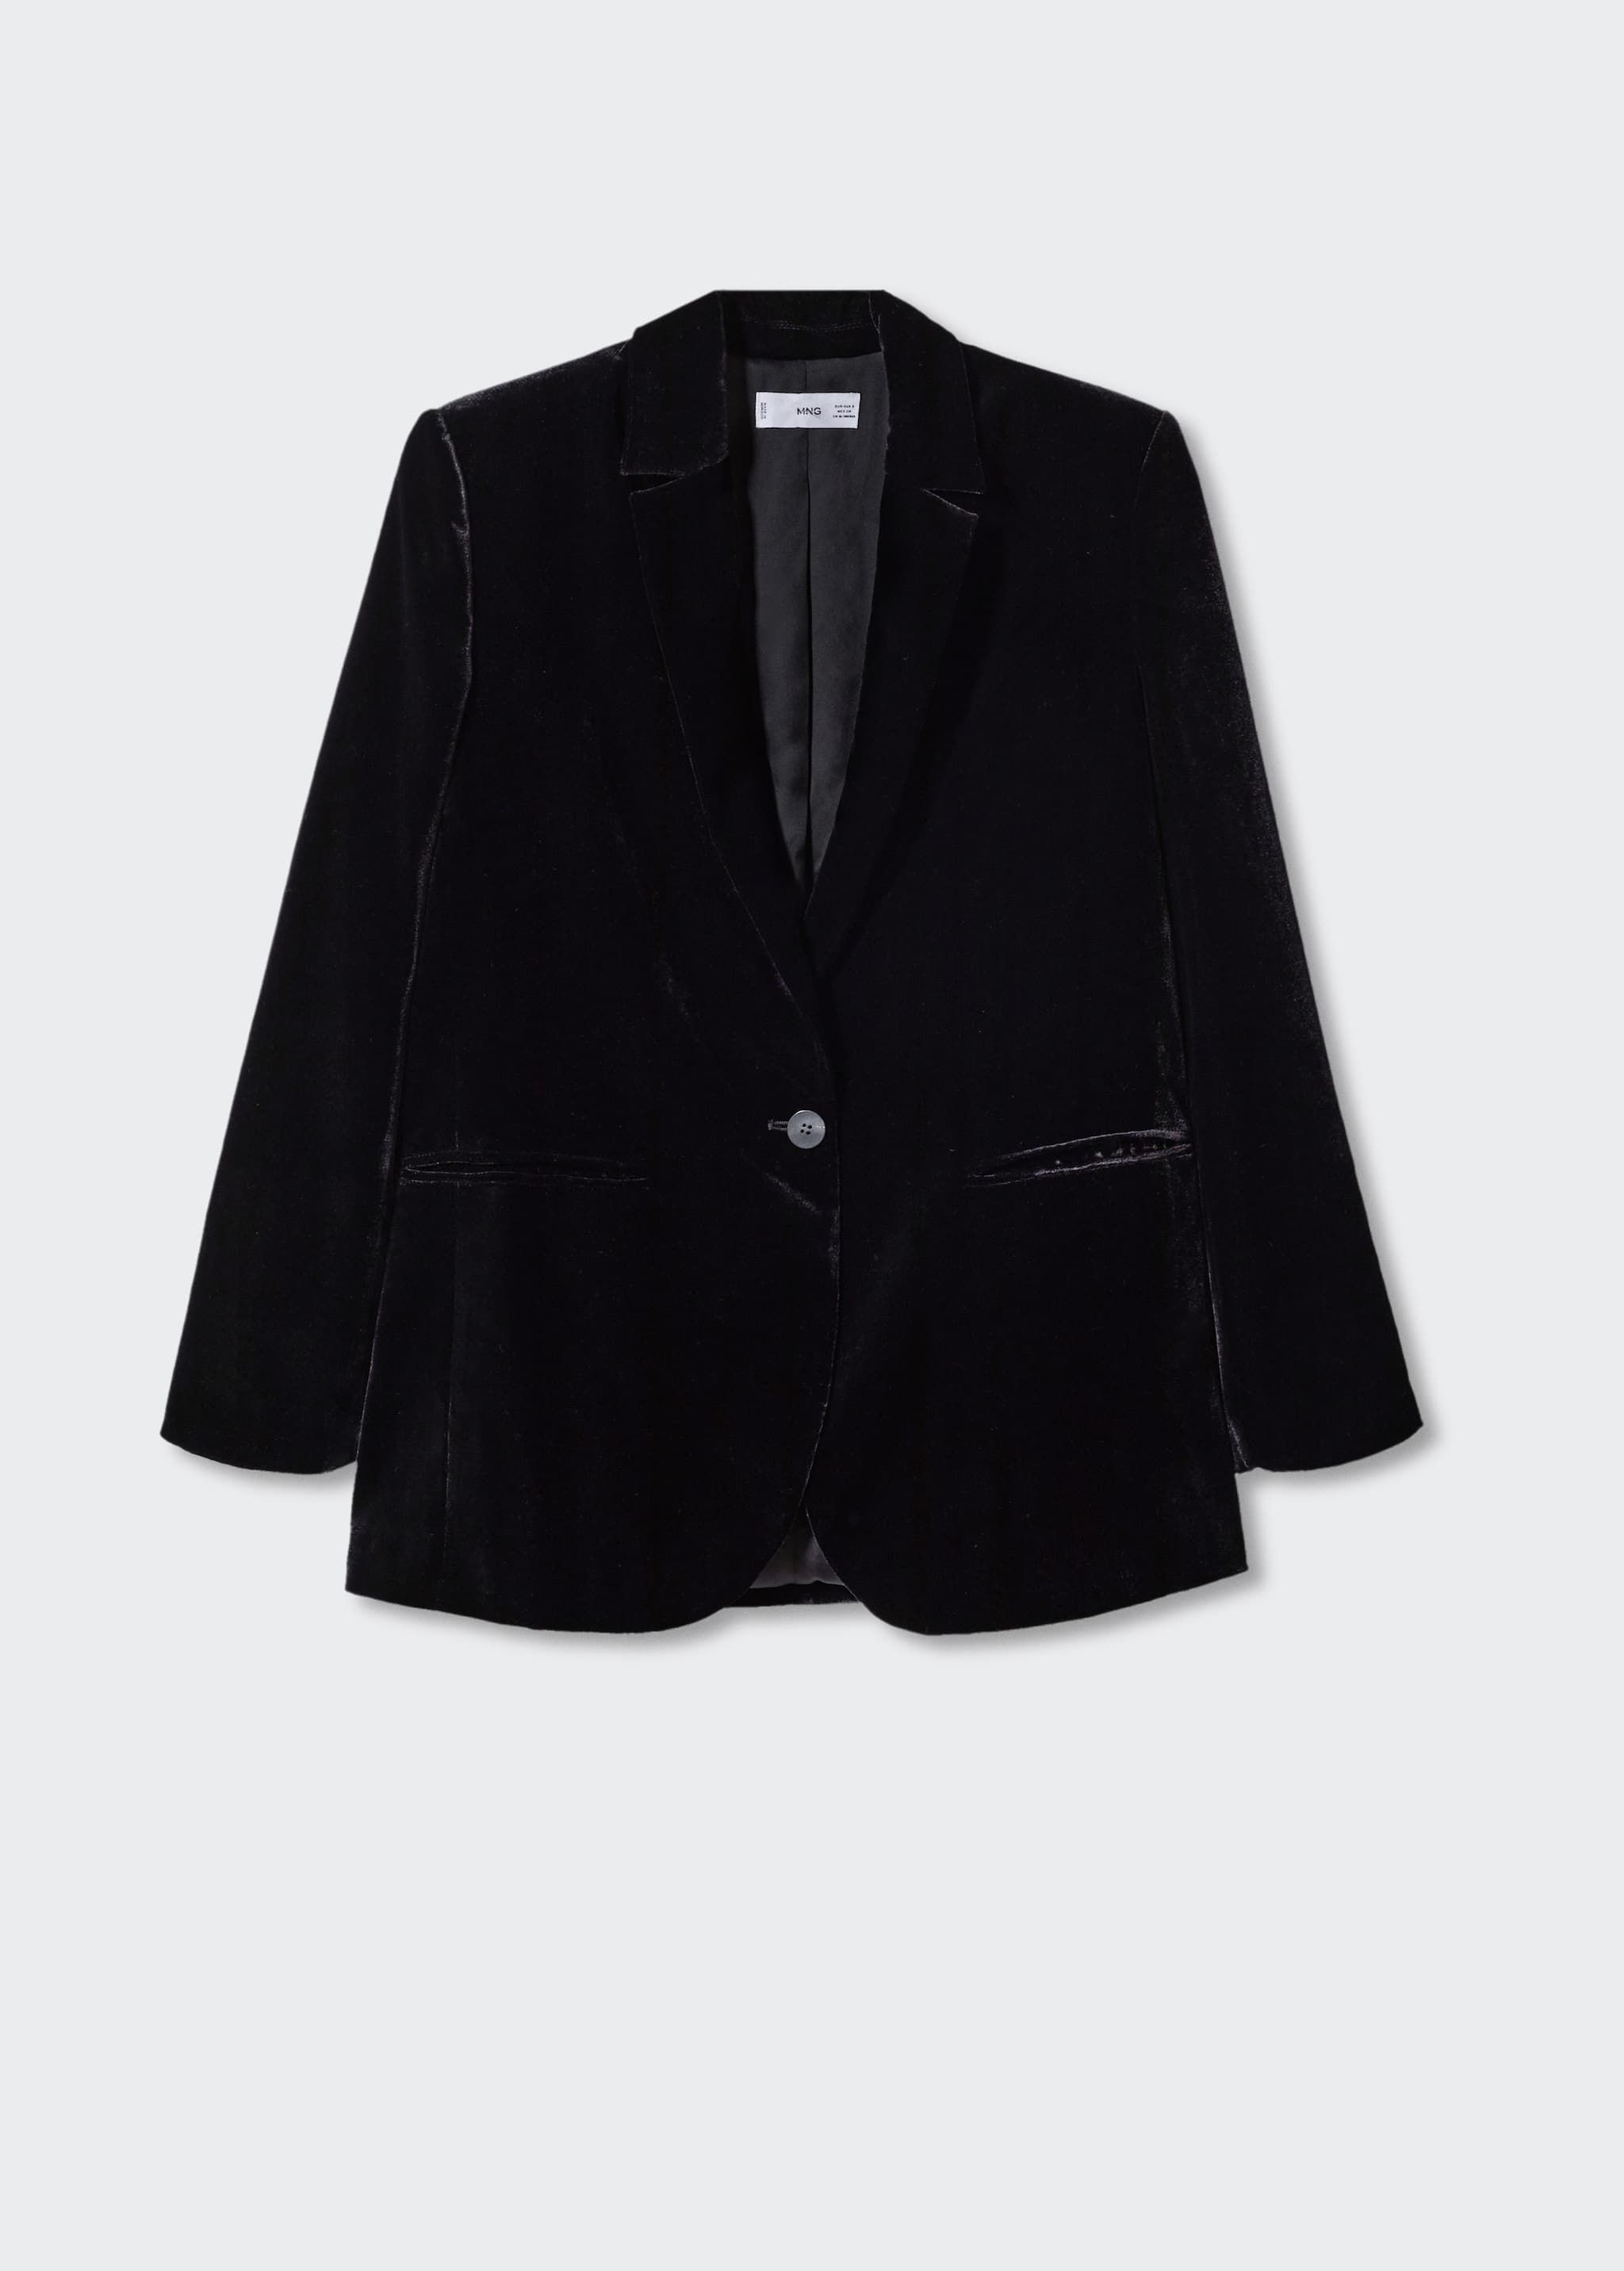 Velvet suit blazer - Article without model